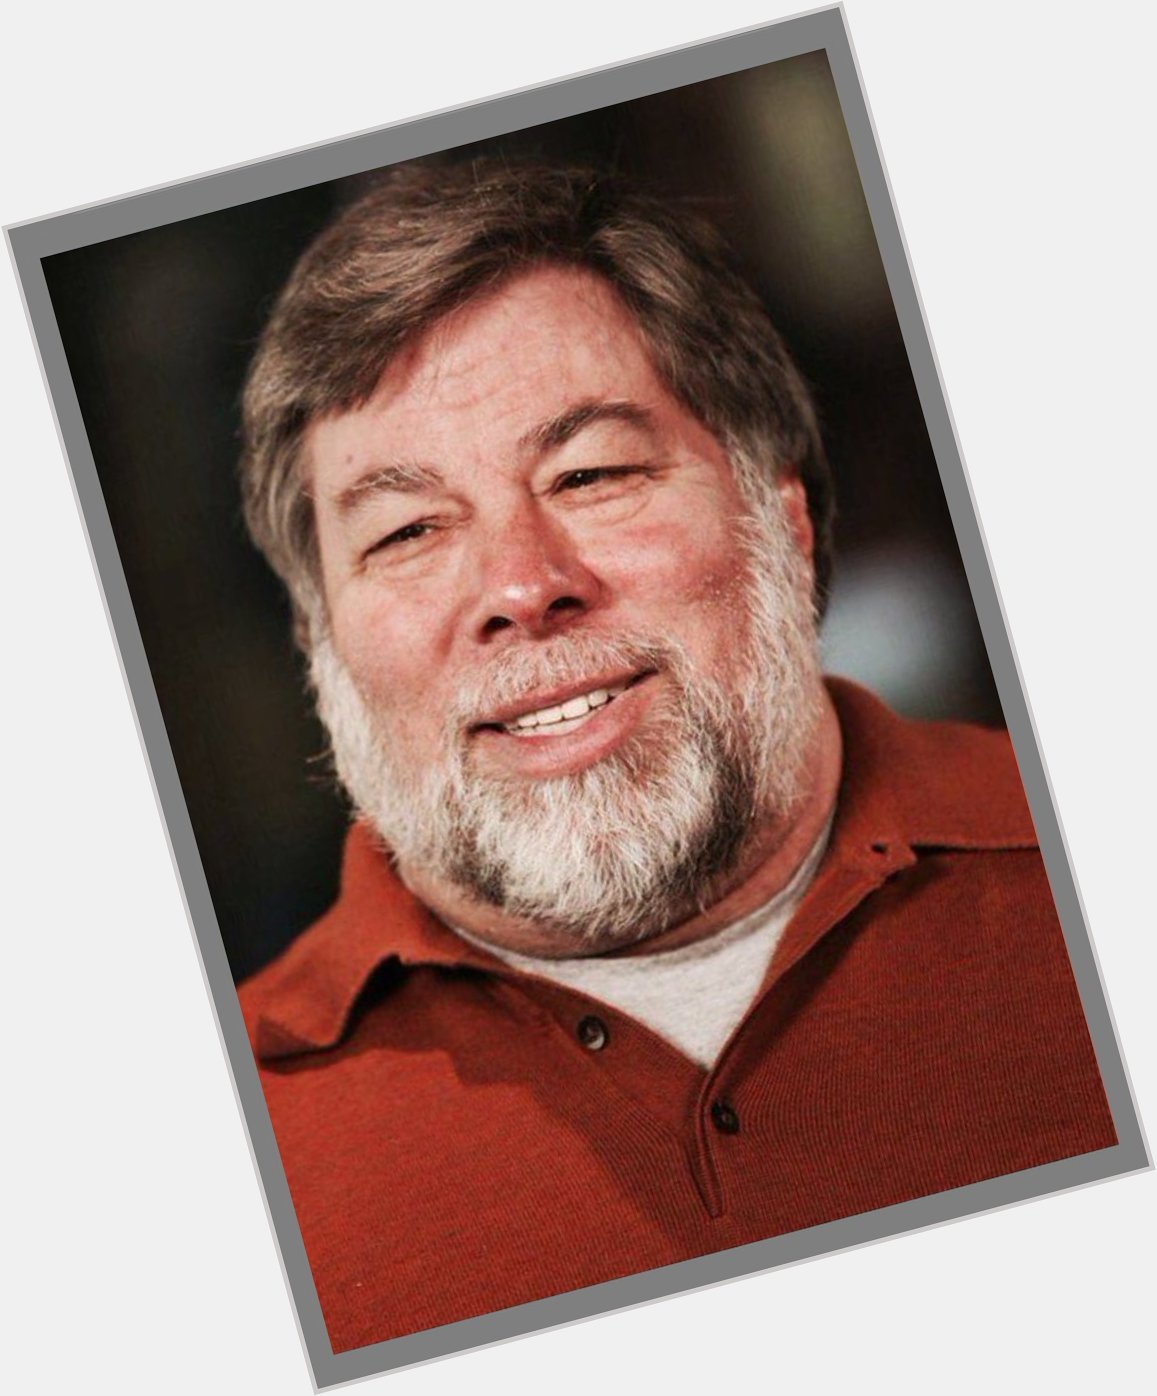   Happy Birthday to Steve Wozniak   